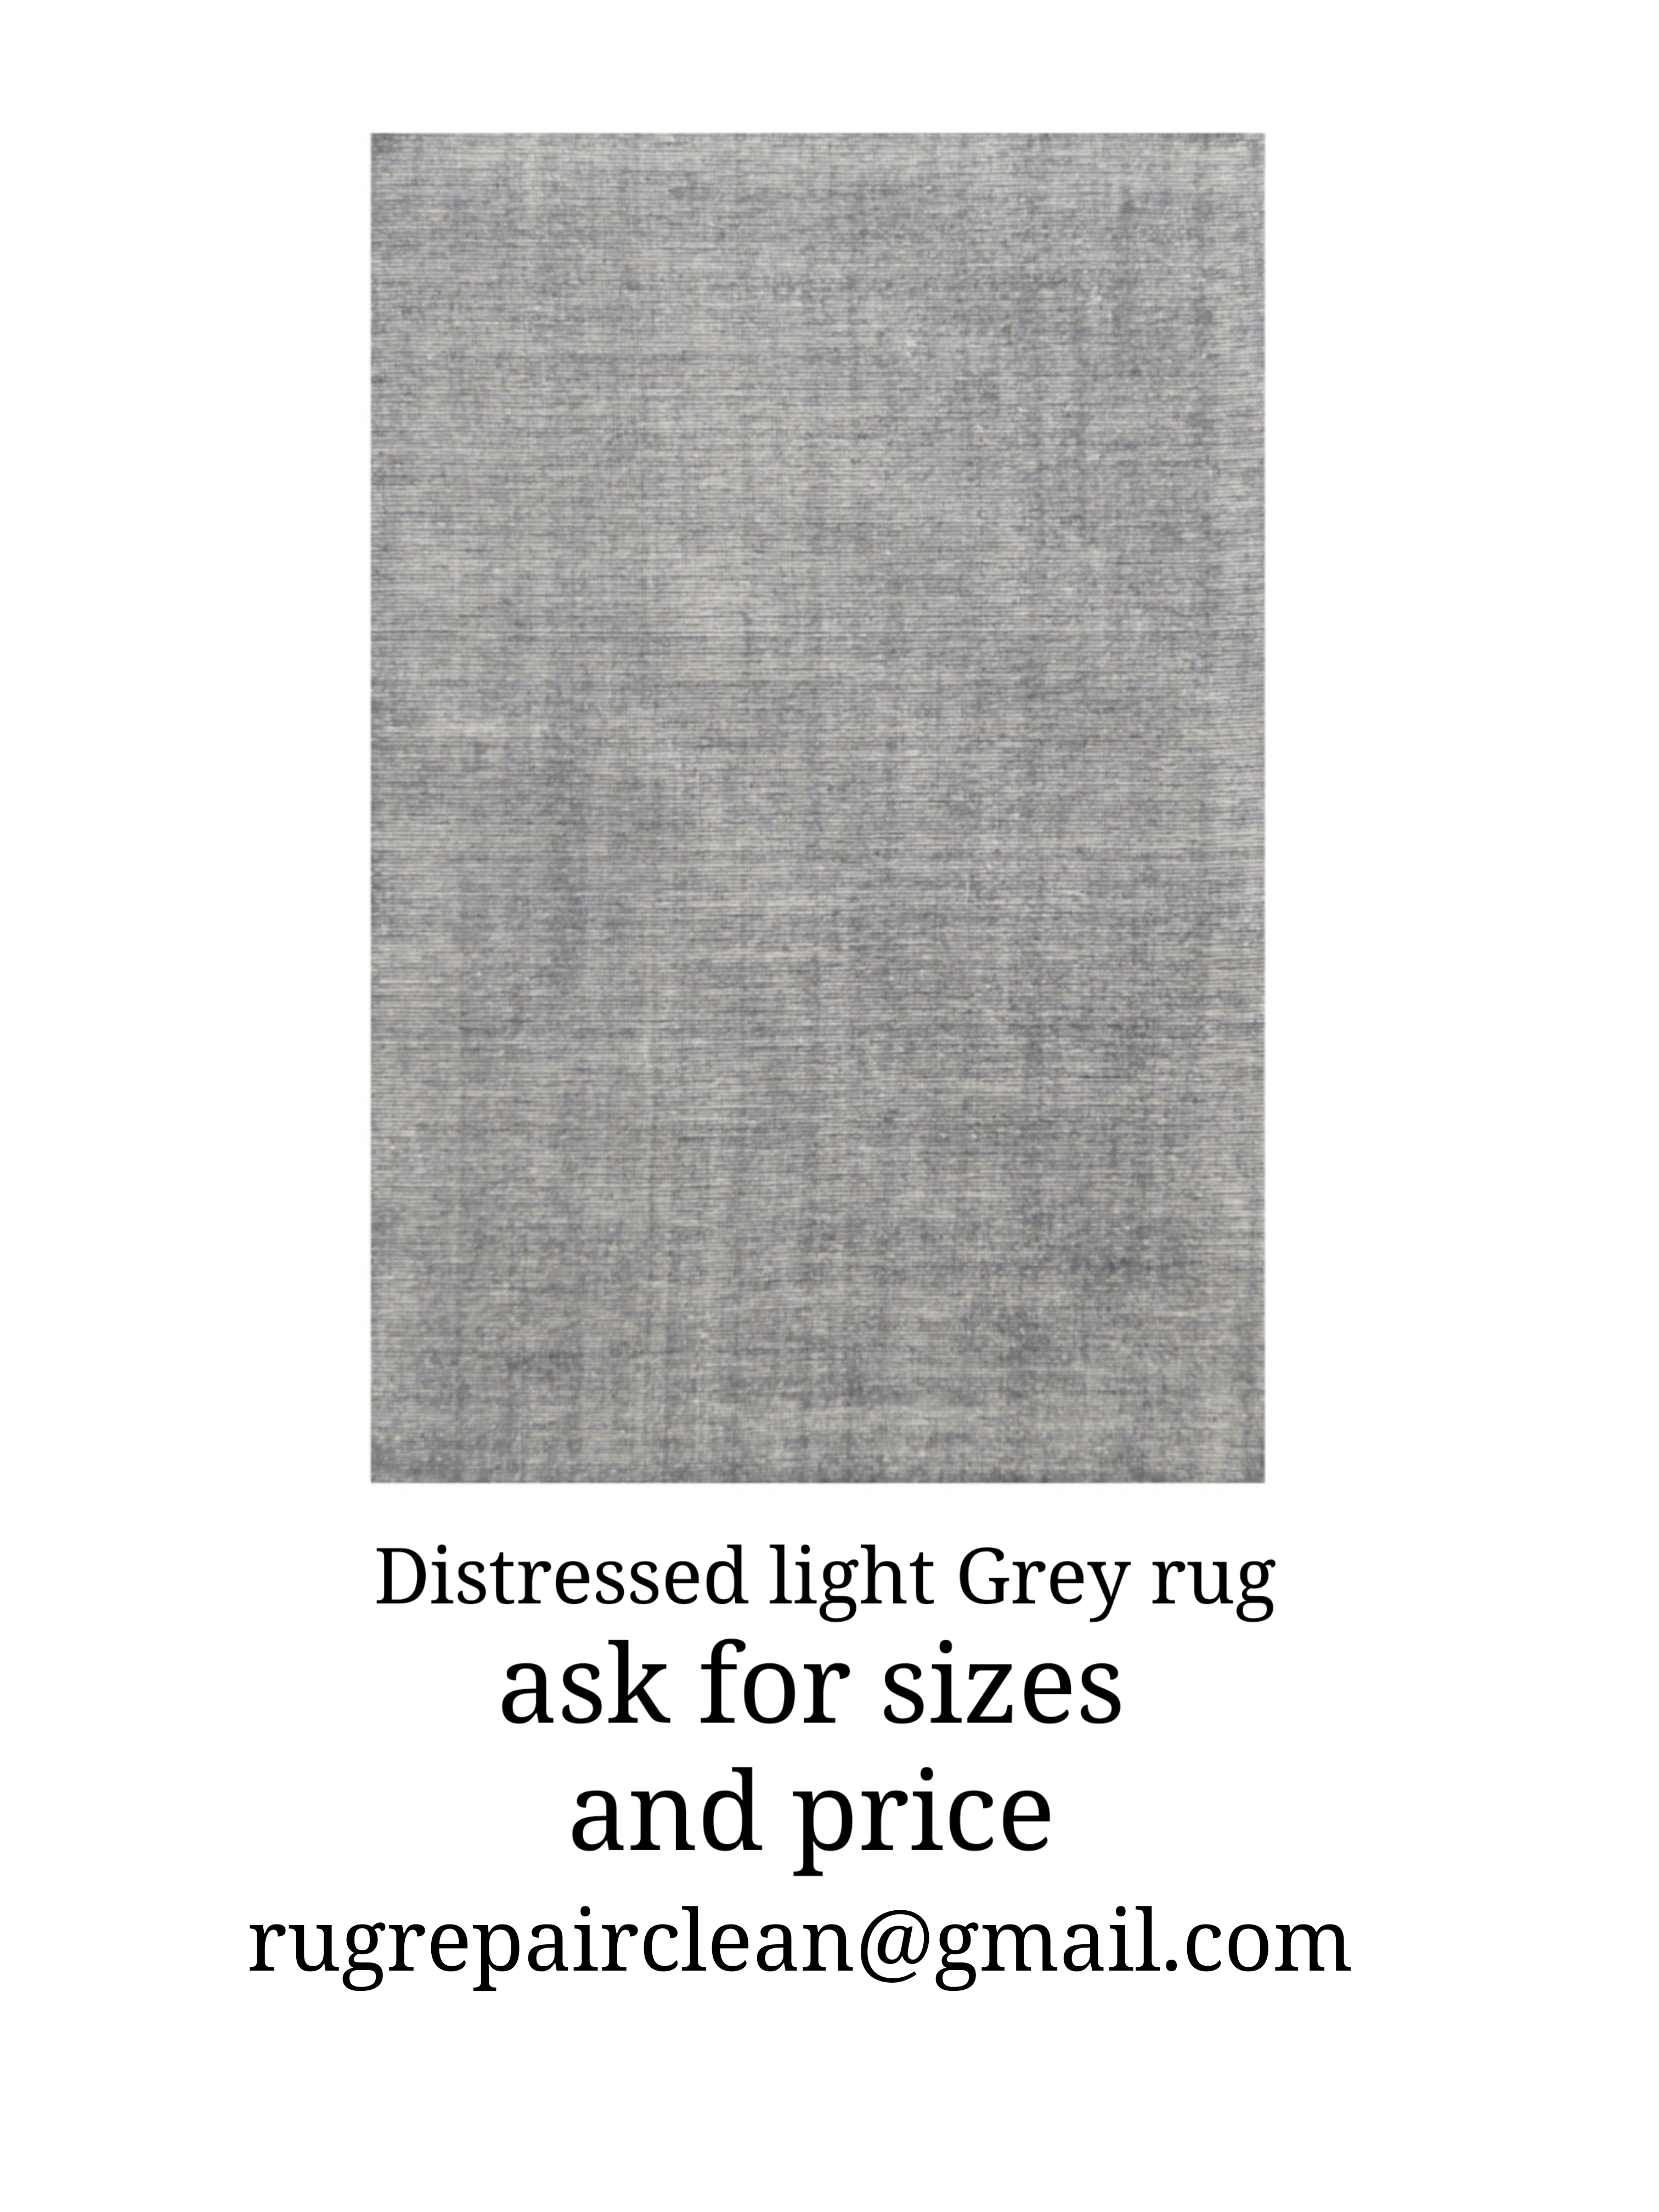 Light gray distressed rug